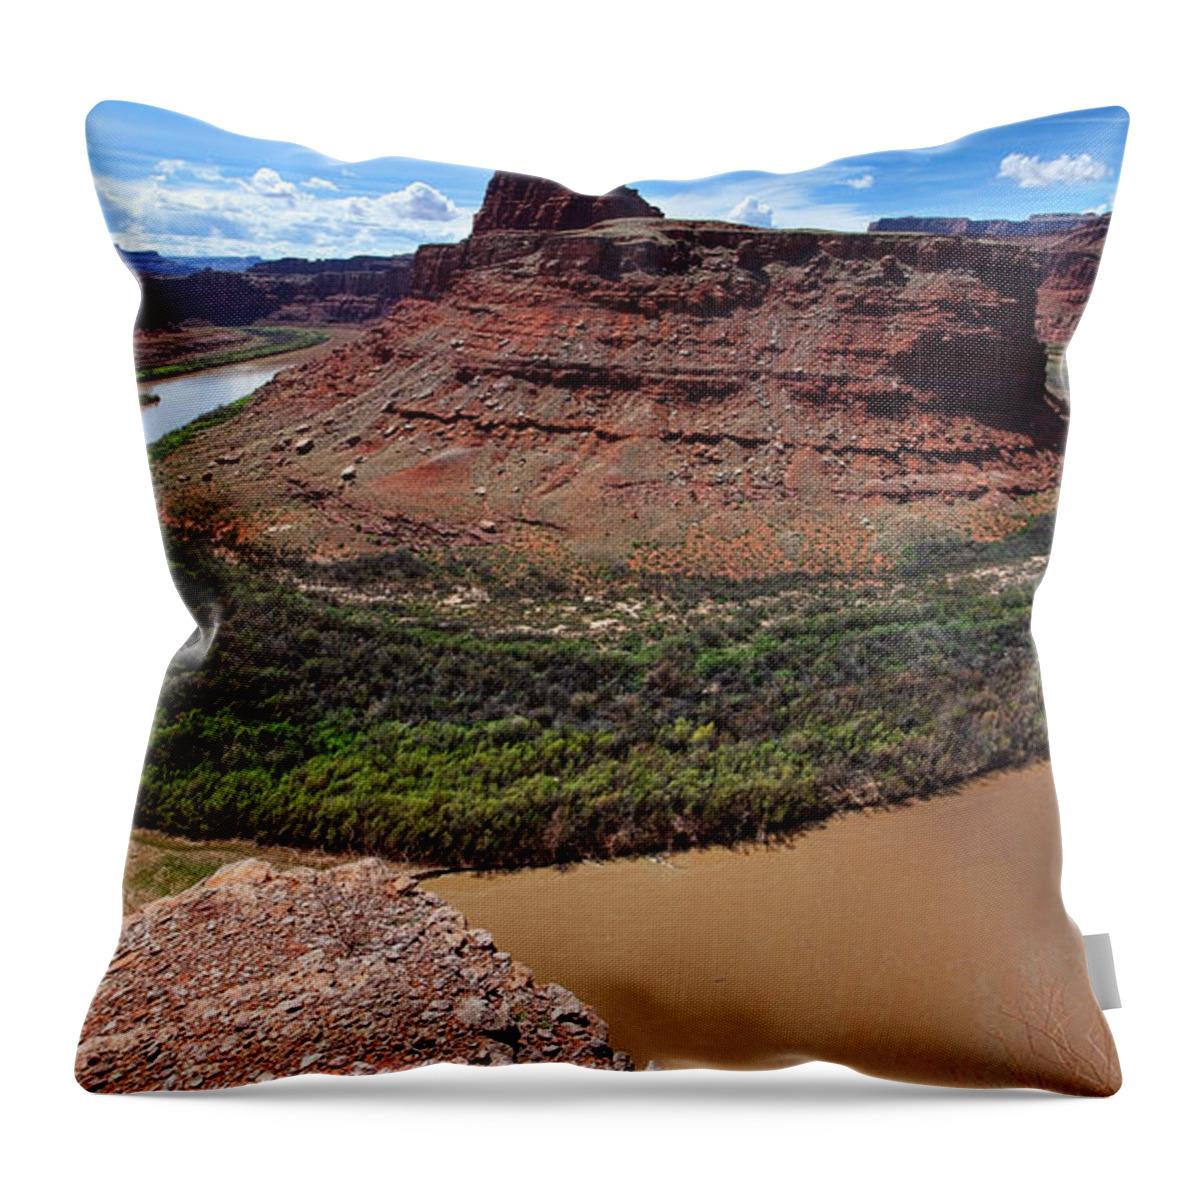 Utah Landscape Throw Pillow featuring the photograph En pointe by Jim Garrison